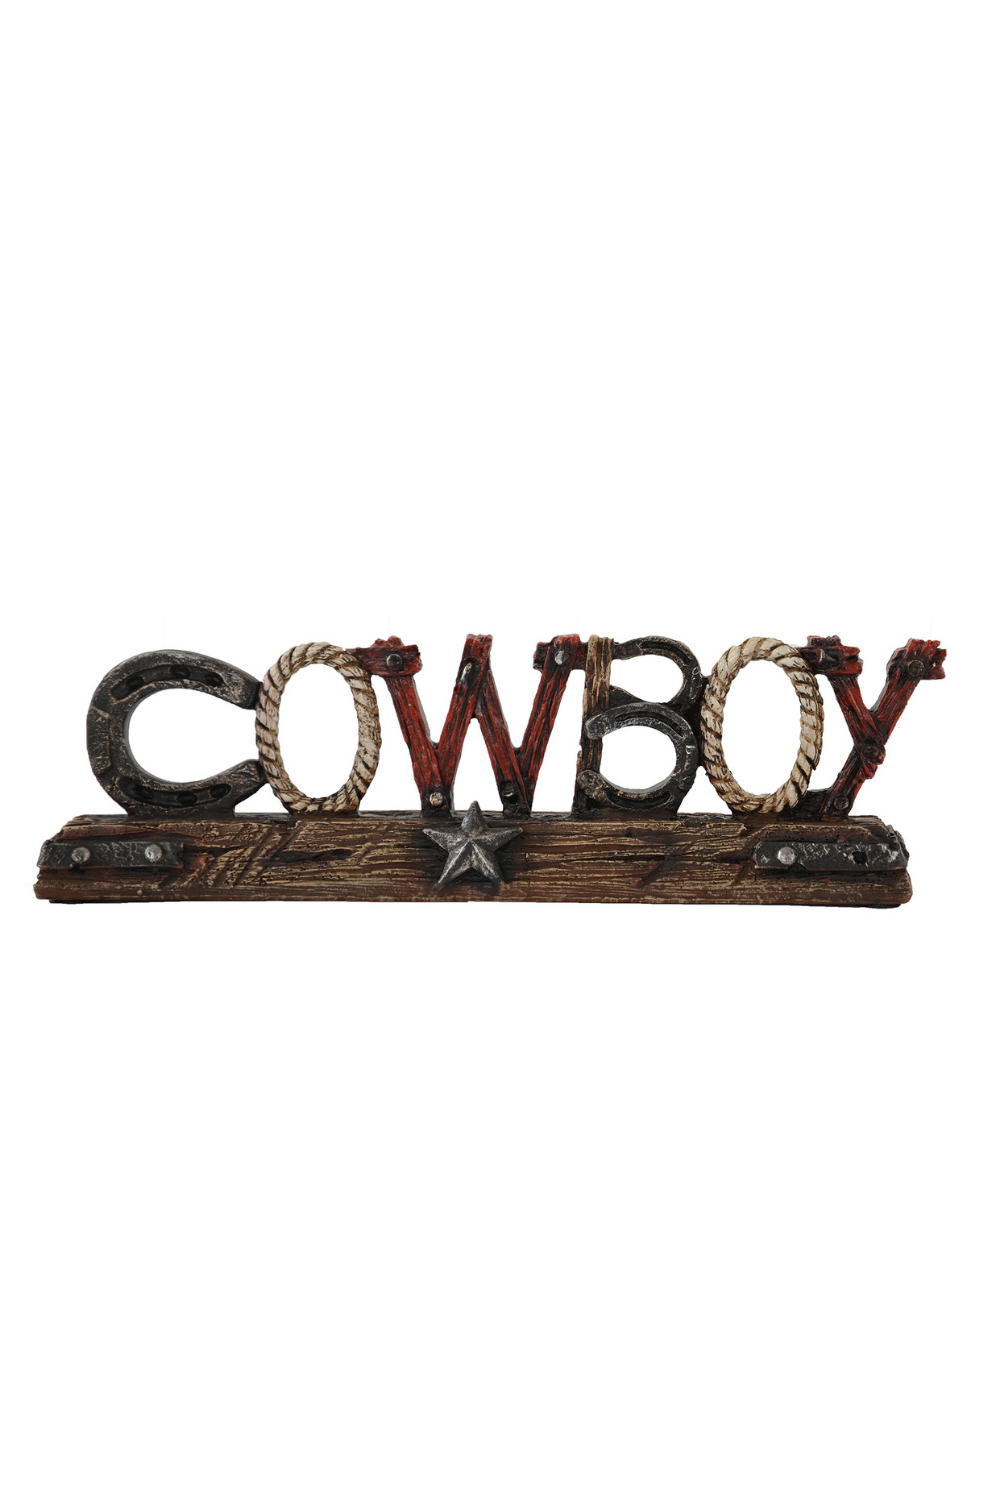 Cowboy Decor Stand